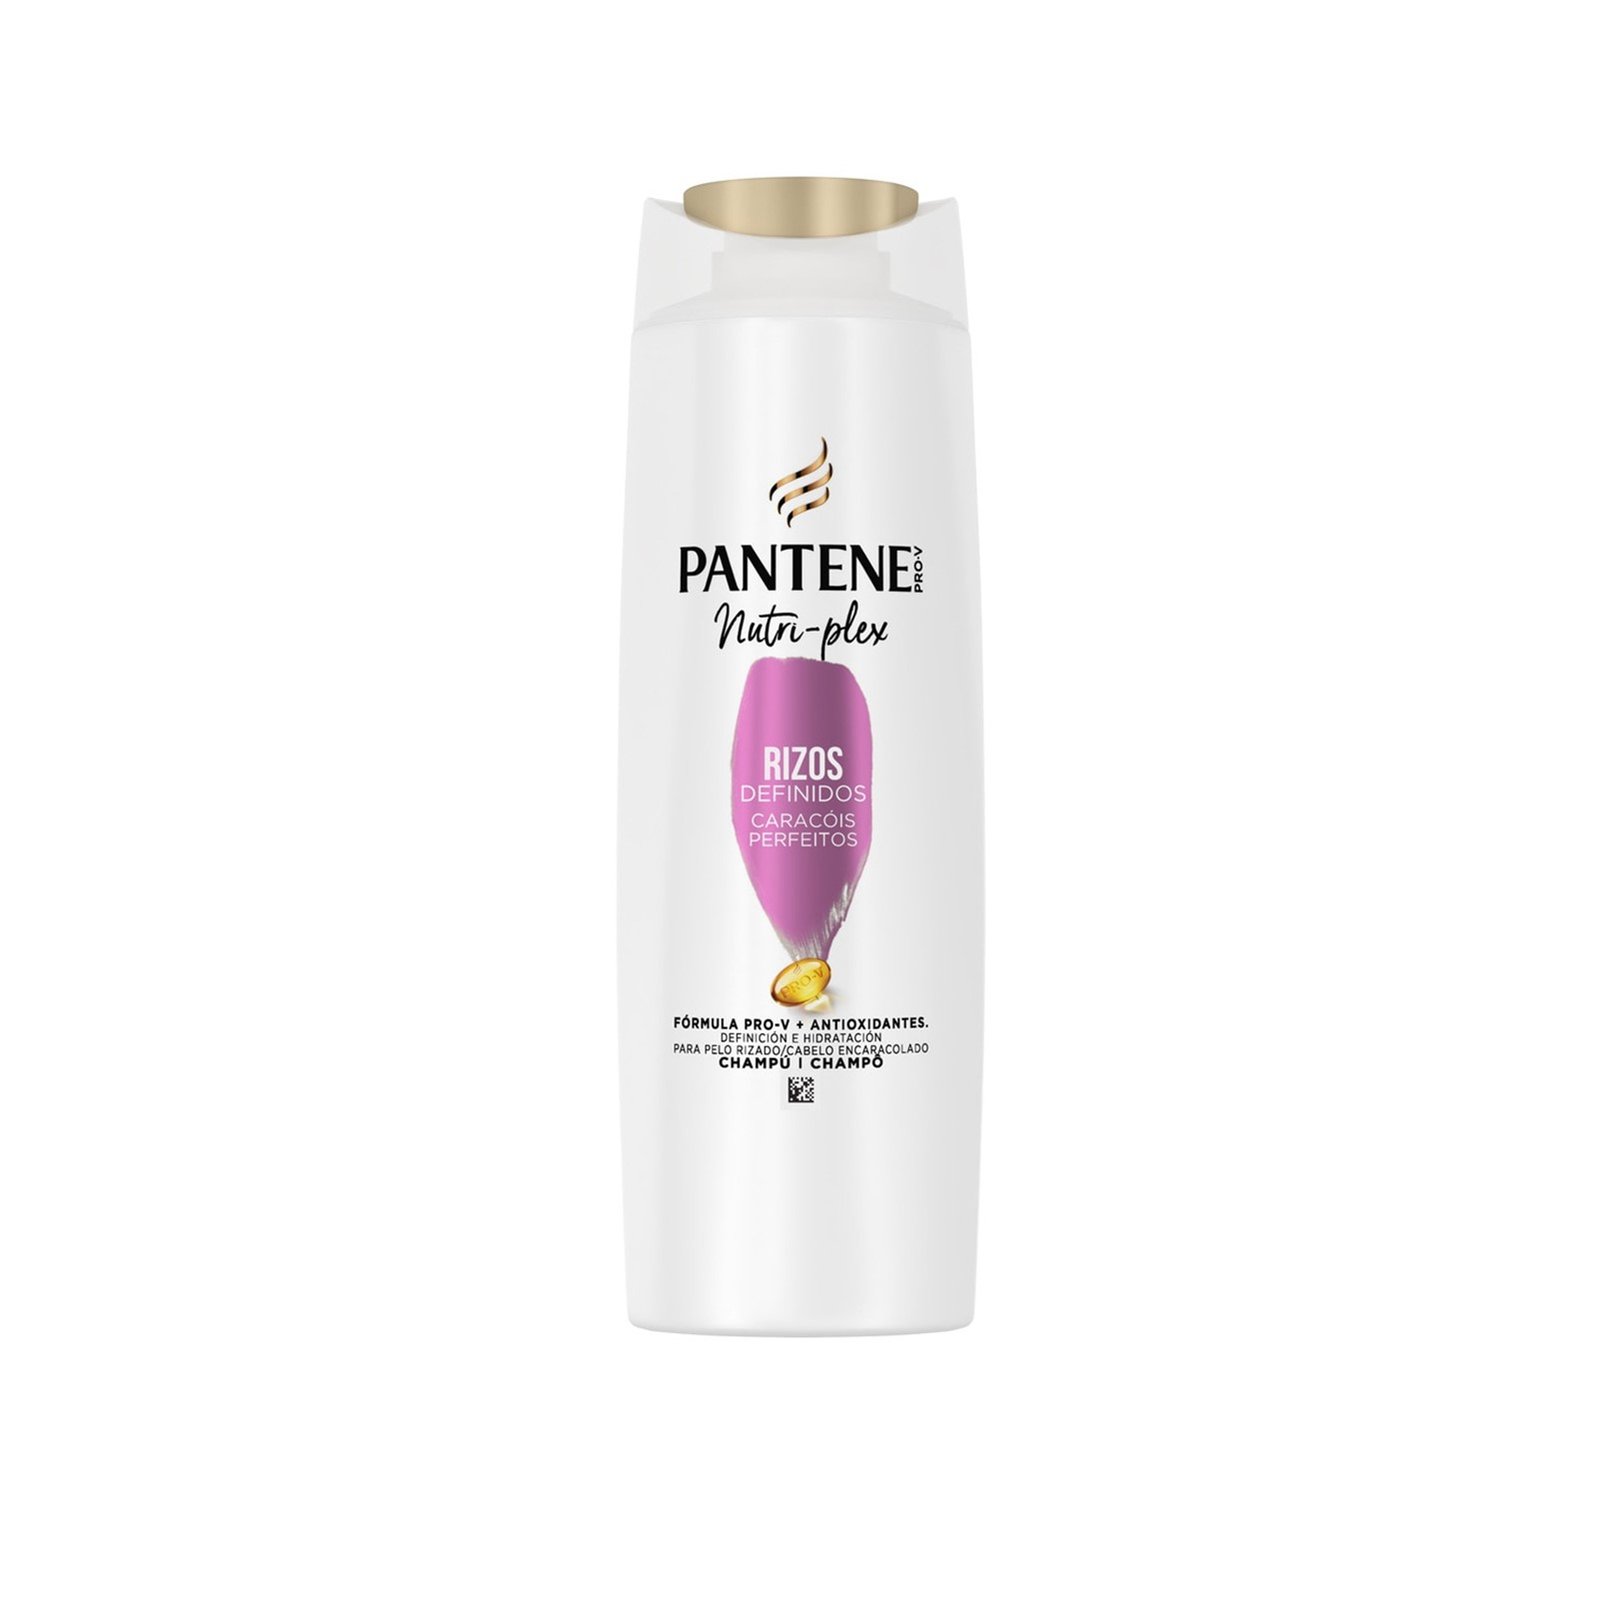 Pantene Pro-V Nutri-Plex Defined Curls Shampoo